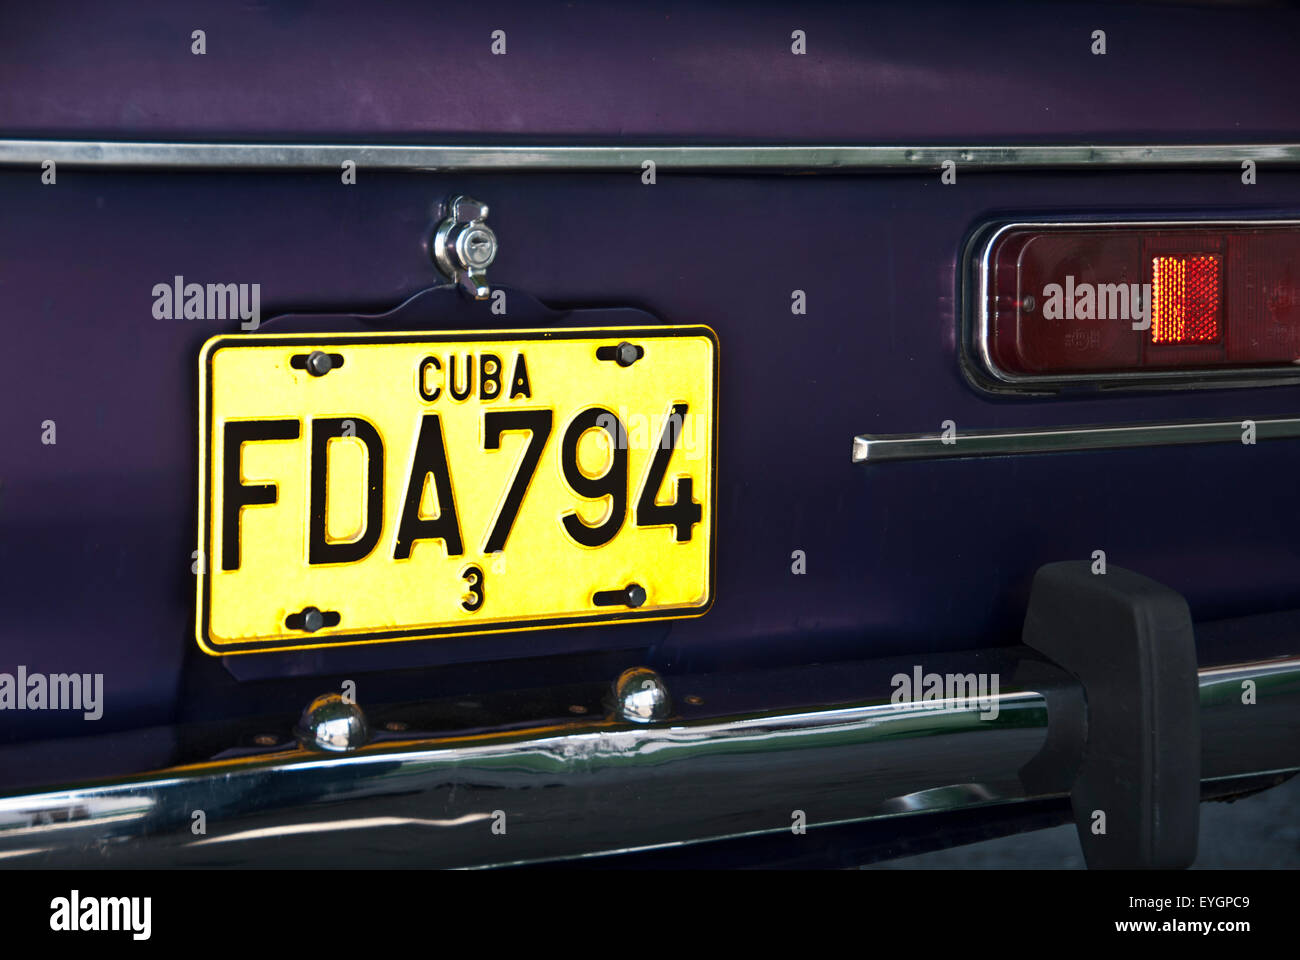 Vintage vettura russa a Cuba mostra numero di targa Foto Stock